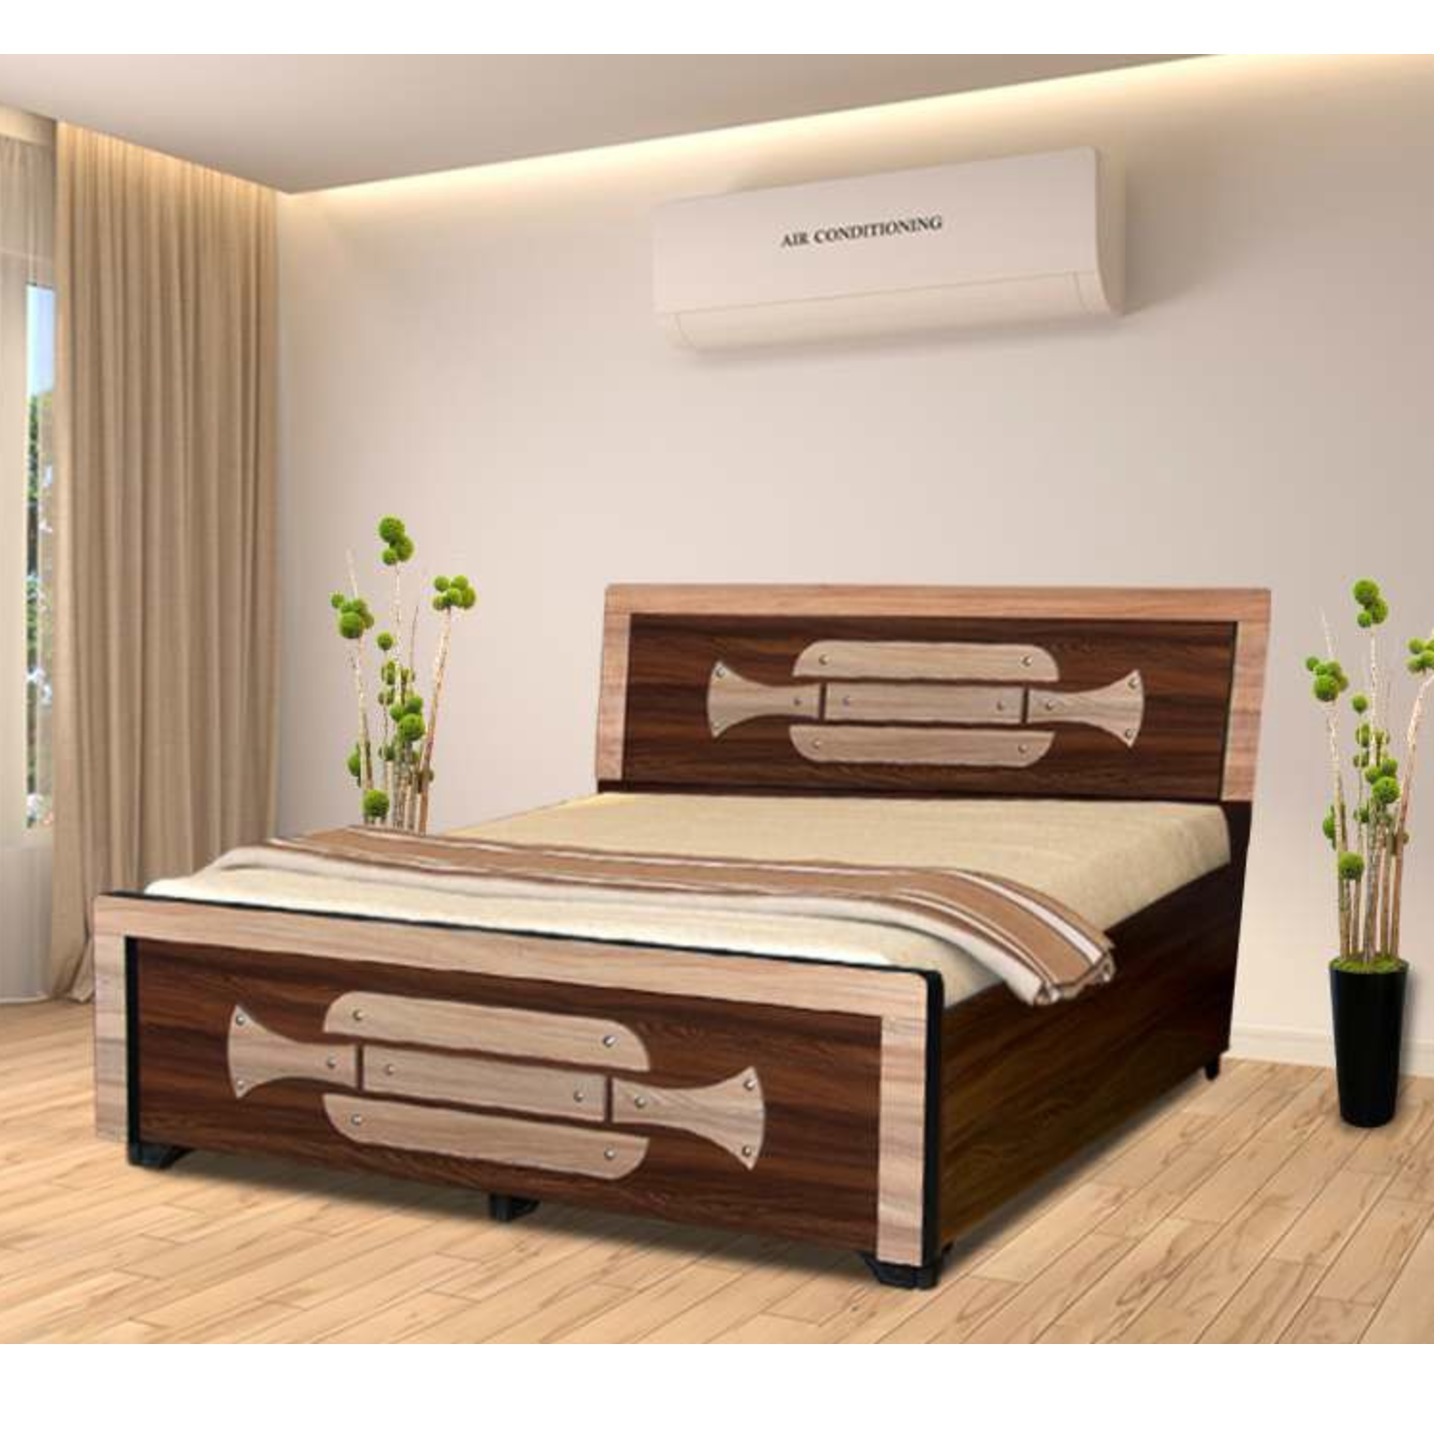 HS Badshah Bed Size 72x 60 In Colour Light Dark Brown